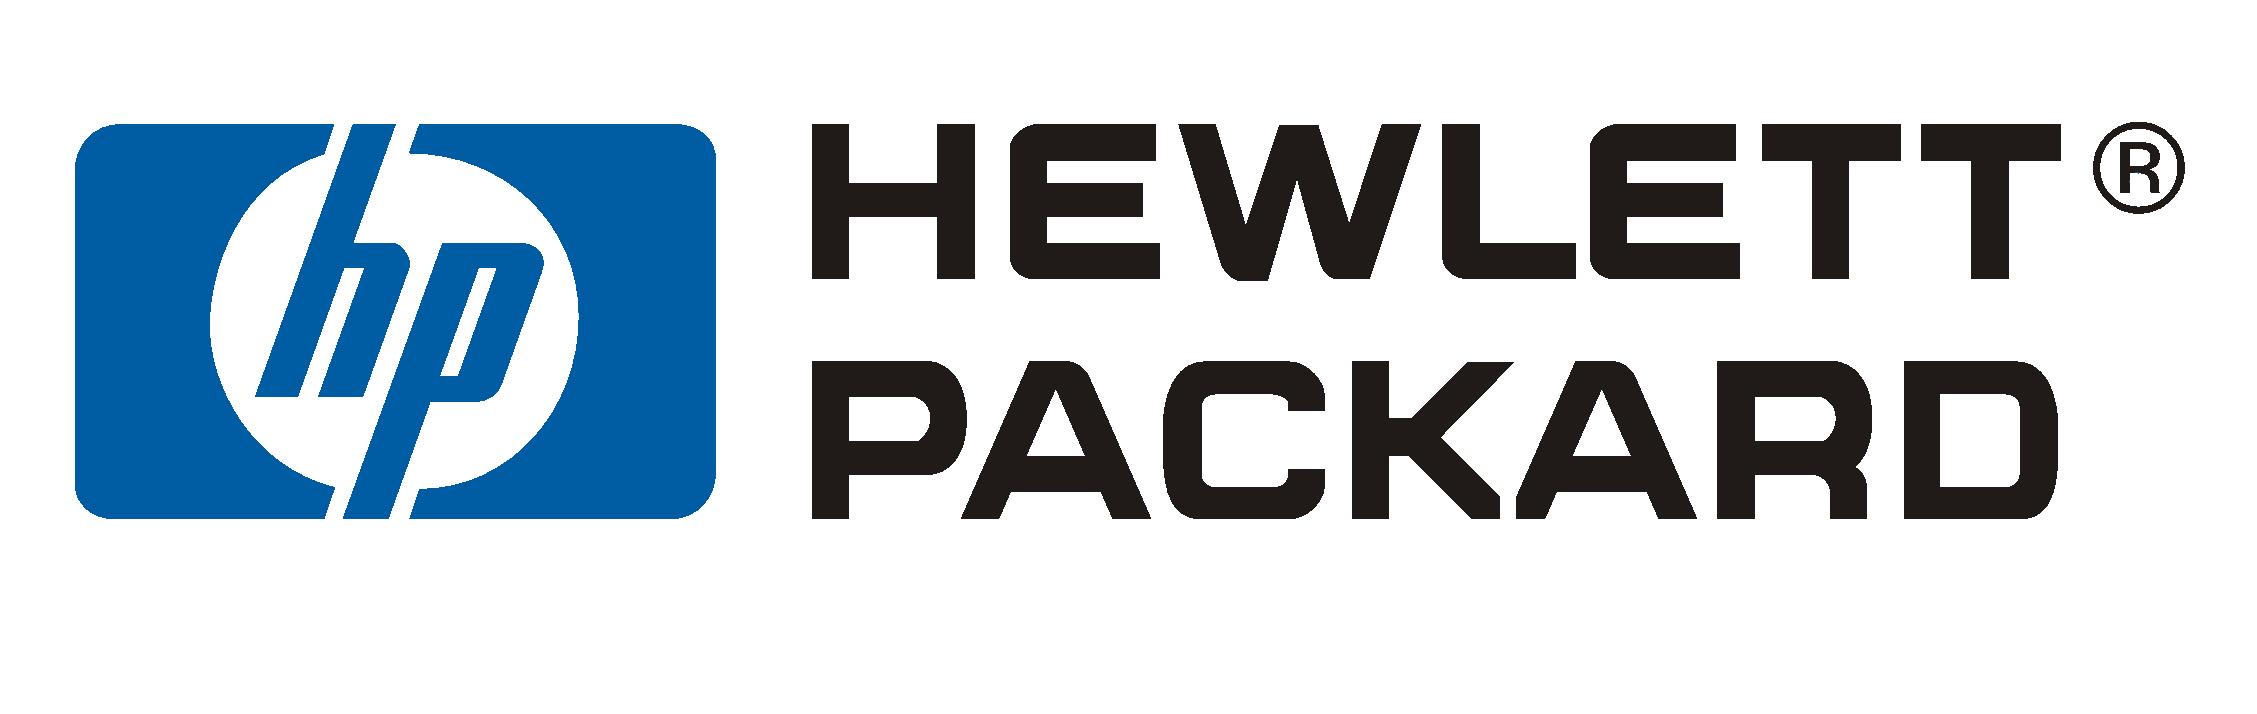 Hewlett-Packard Logo - HP Logo, Hewlett Packard Symbol Meaning, History And Evolution